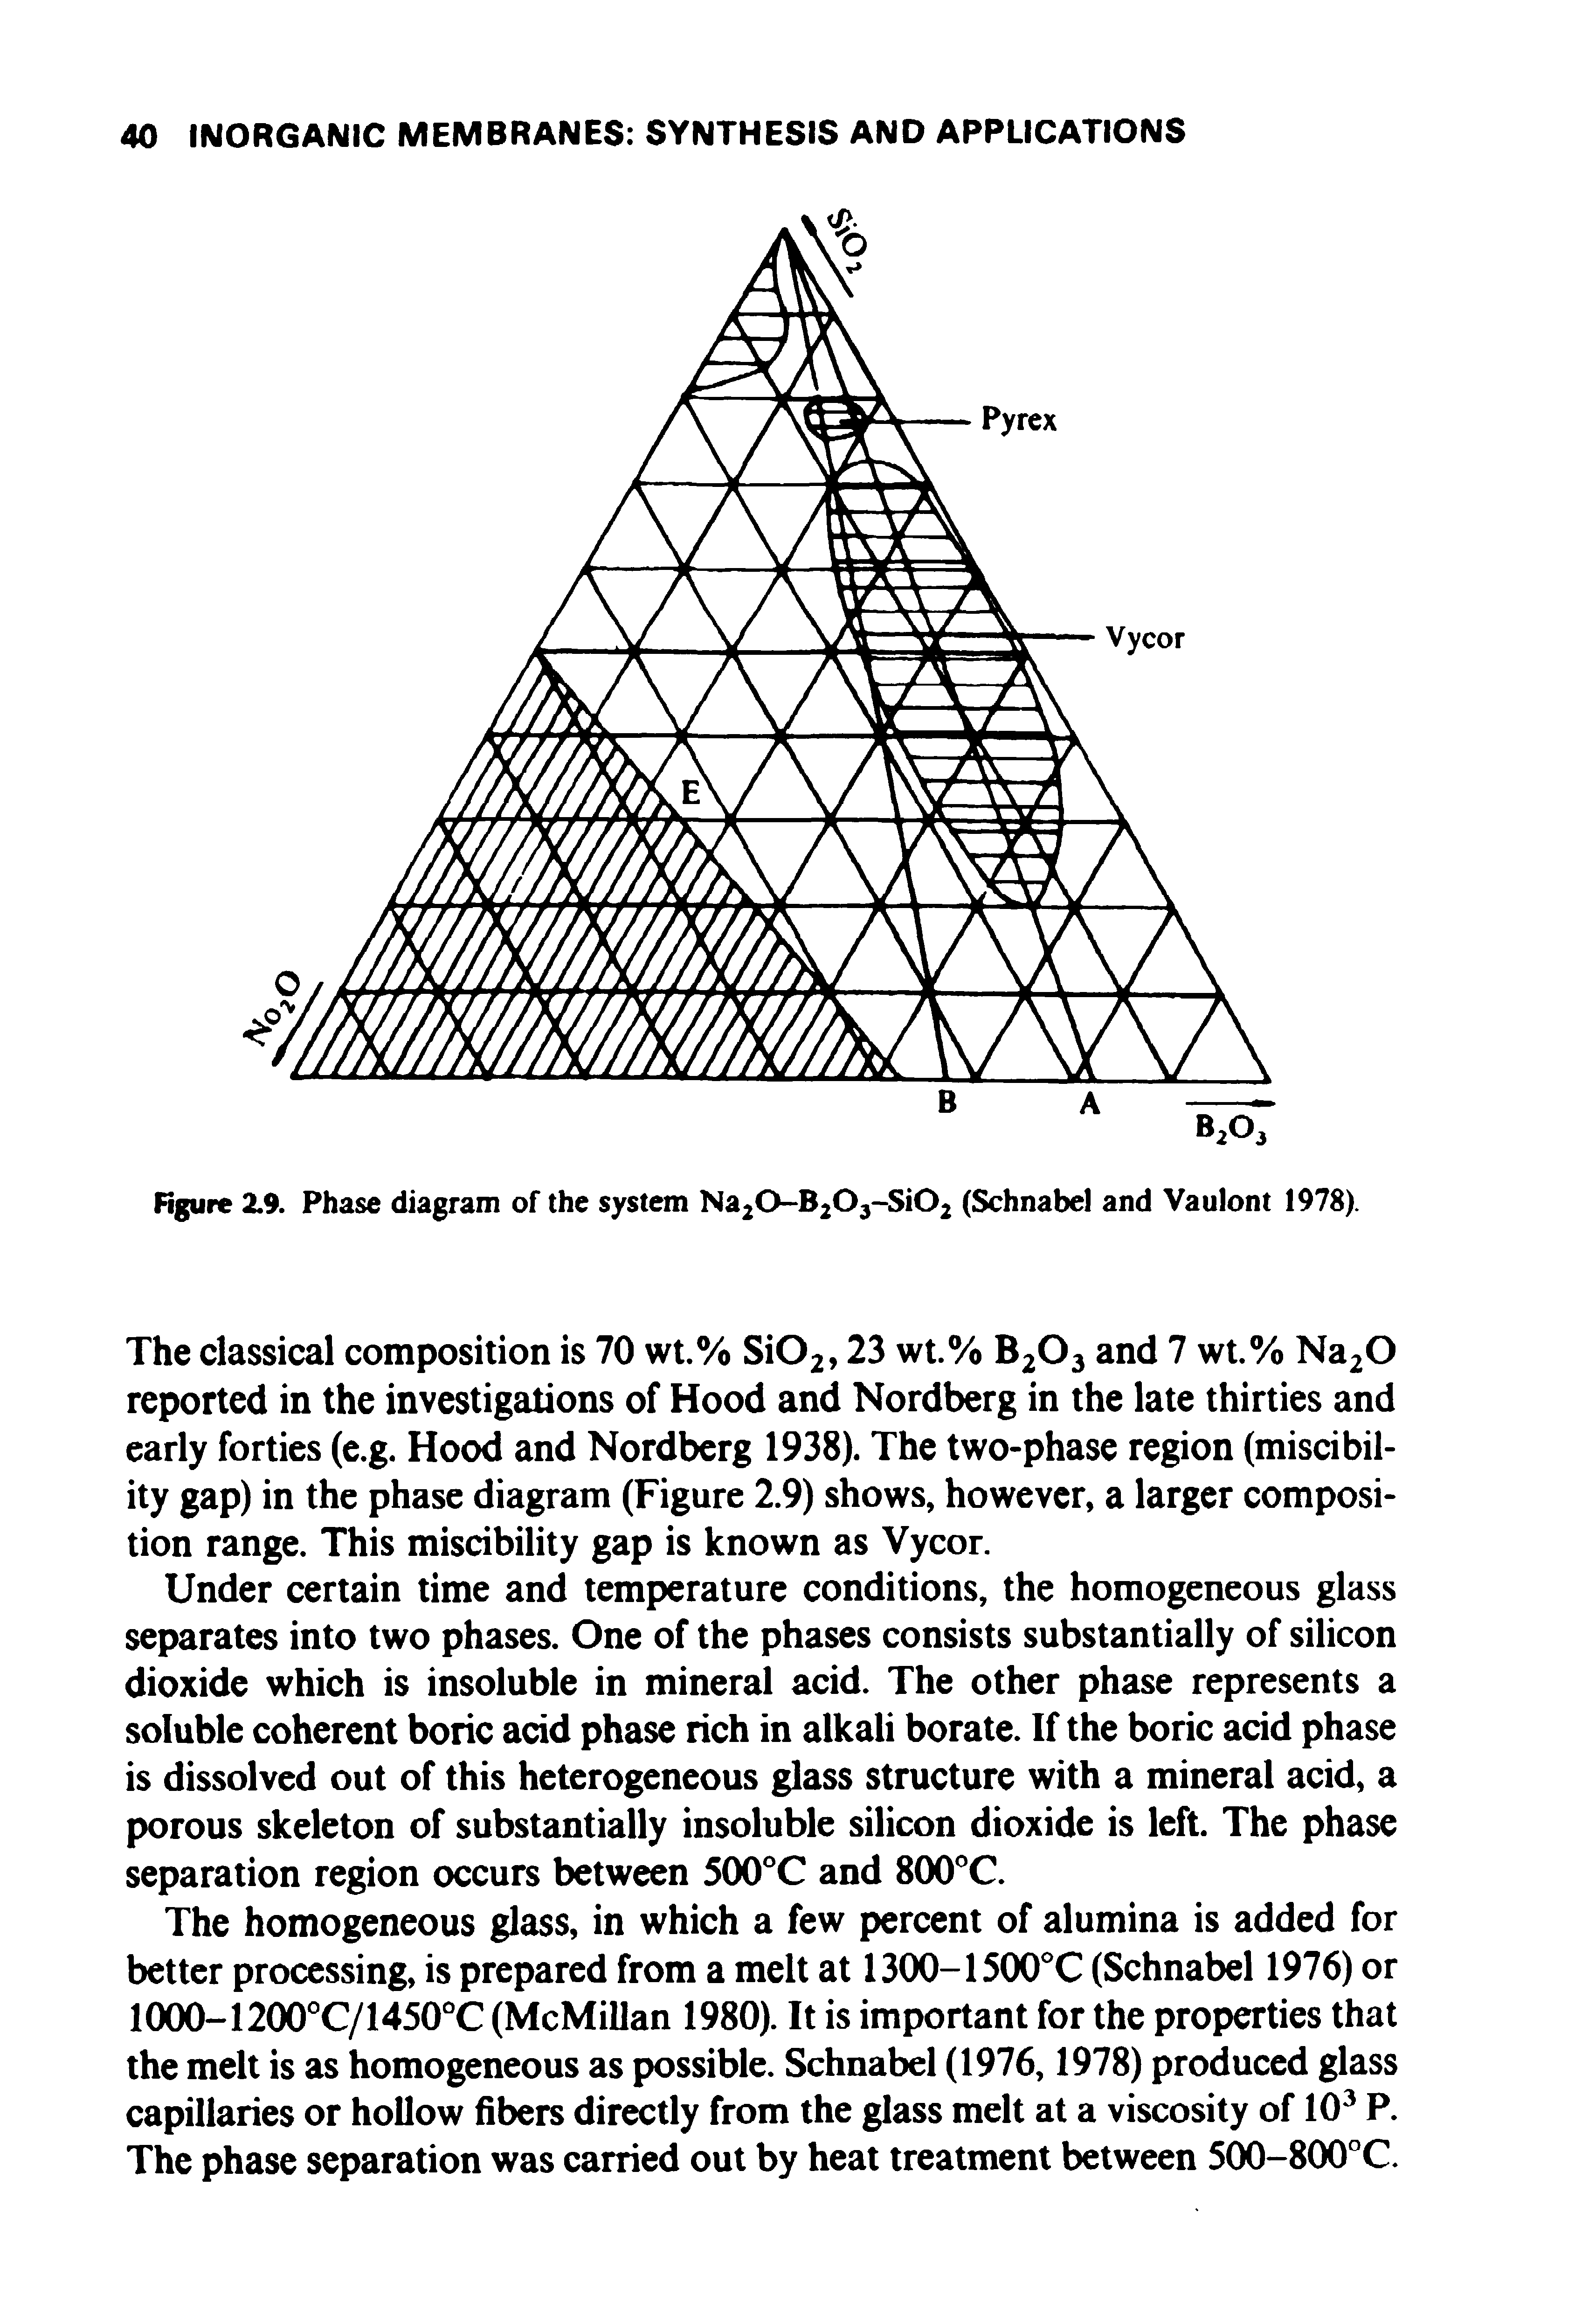 Figure Z9. Phase diagram of the system NajO-BjOj-SiOj (Schnabel and Vaulont 1978).